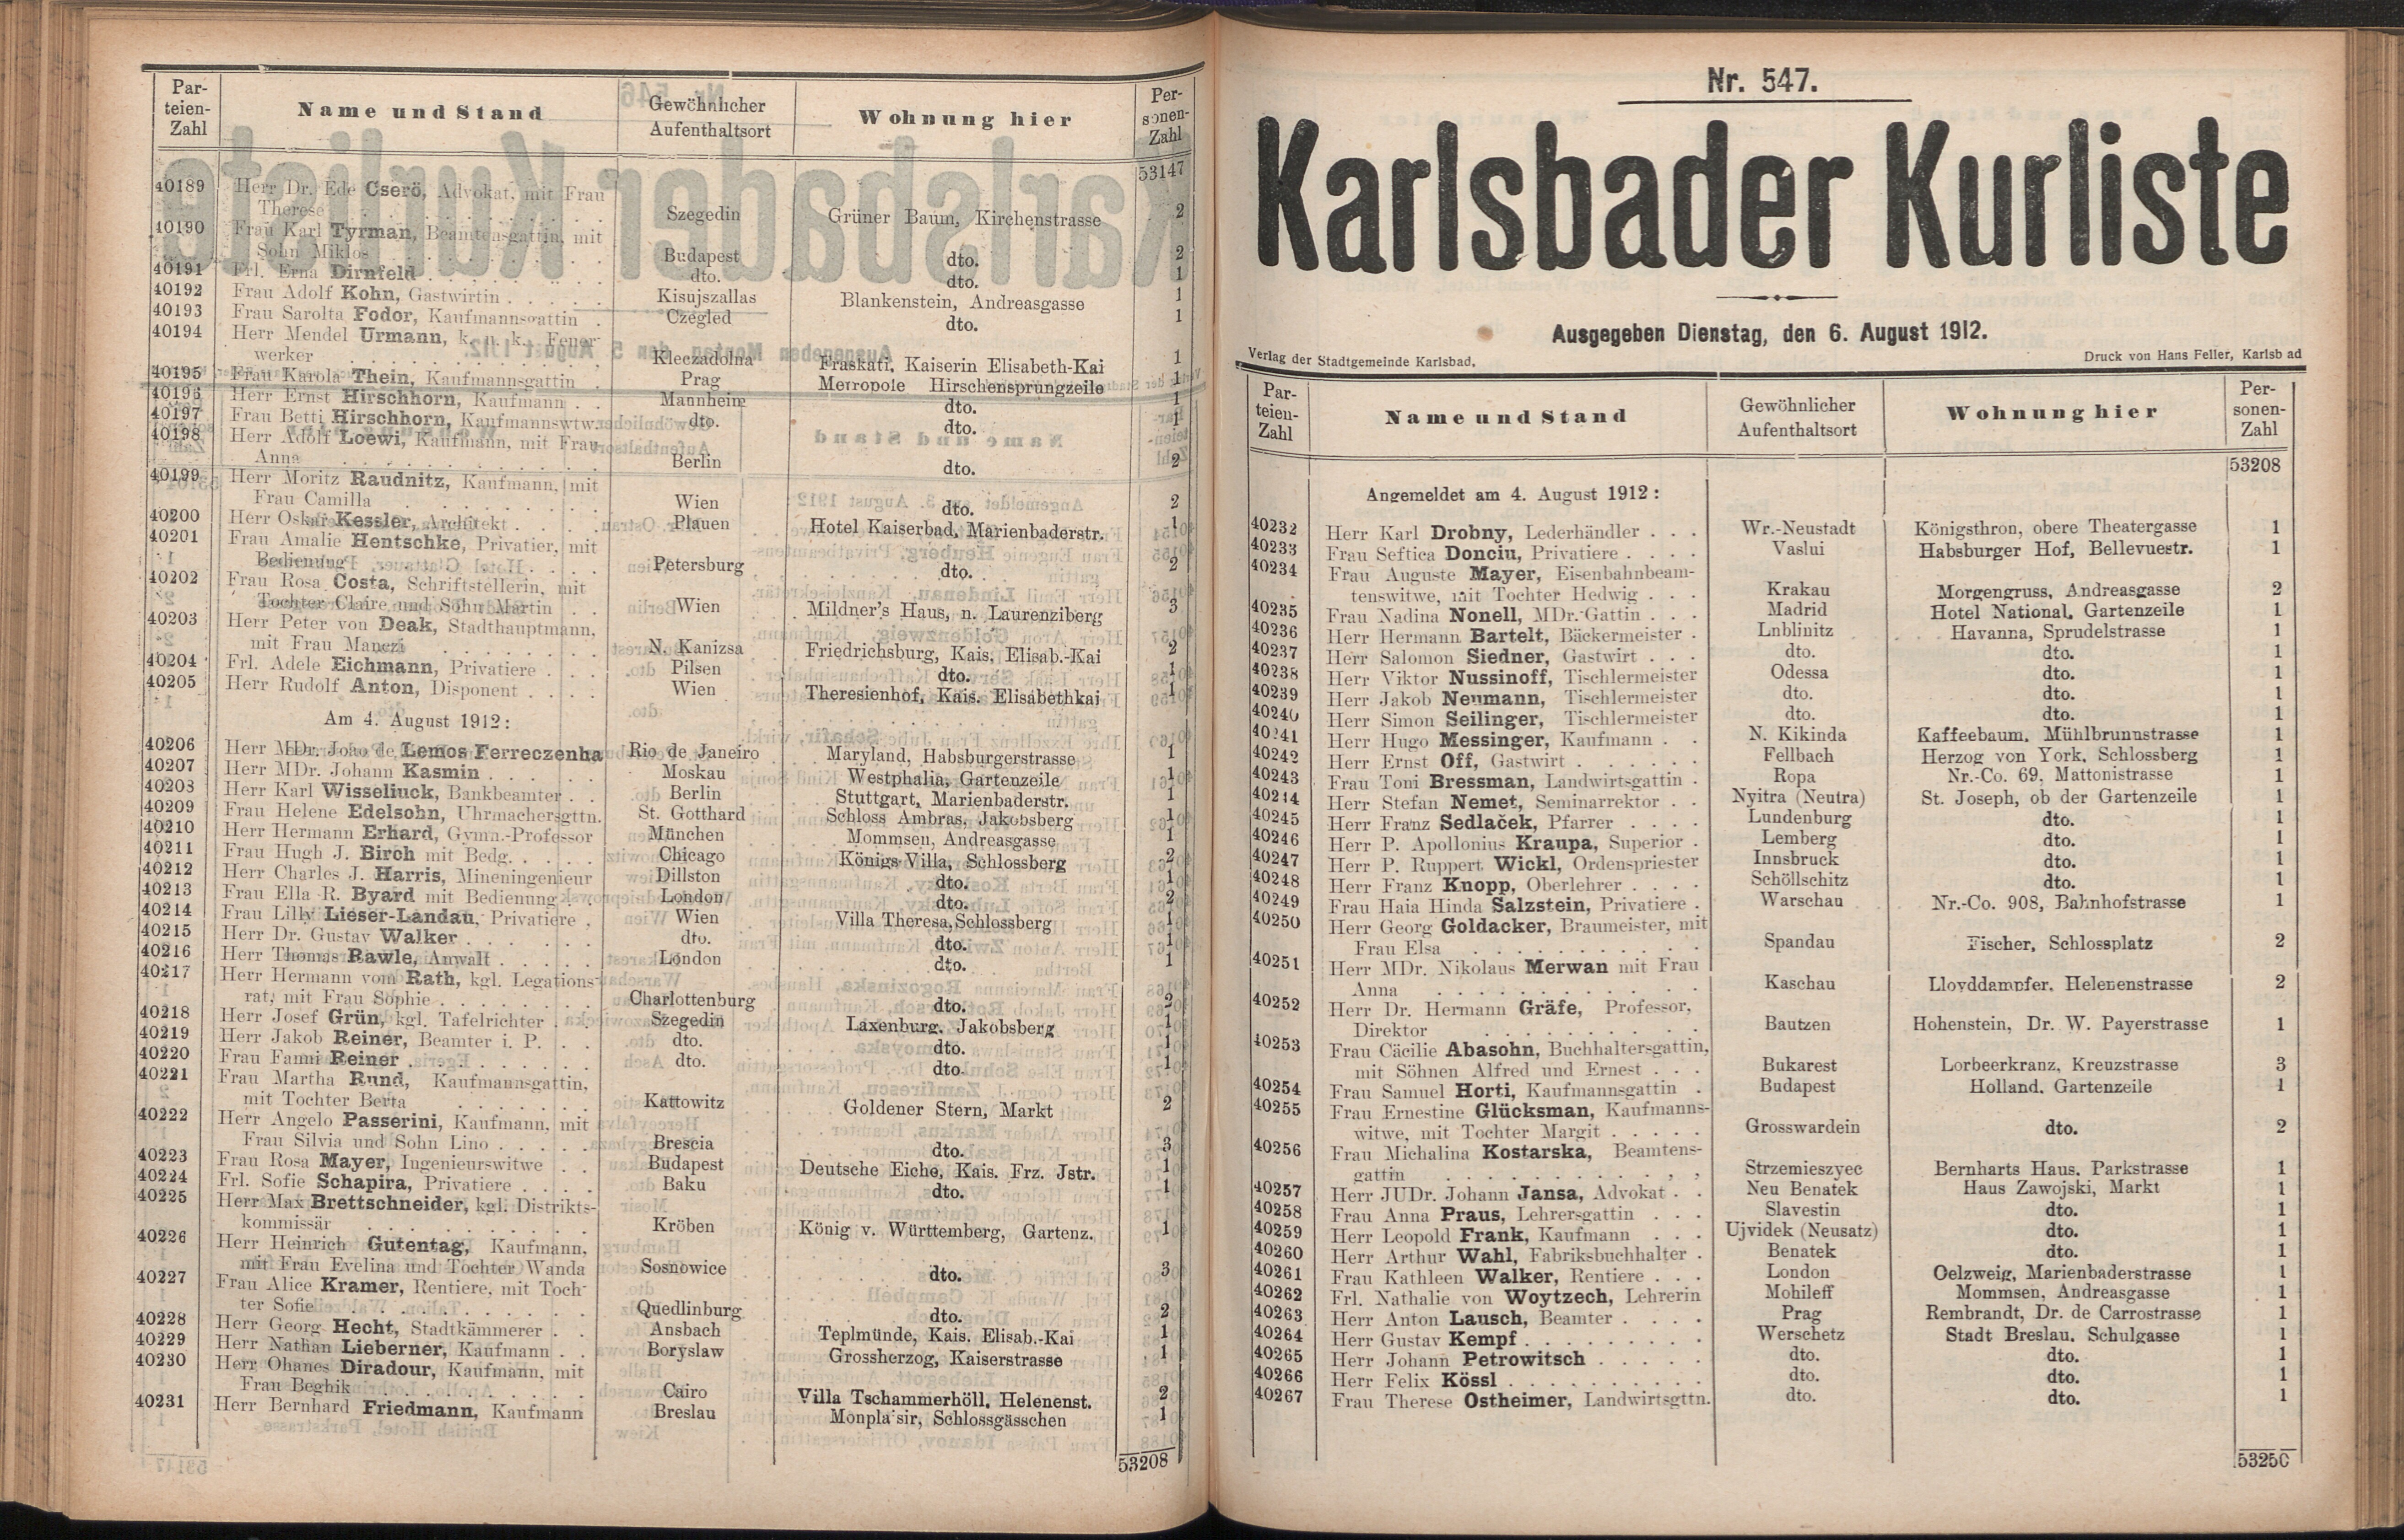 264. soap-kv_knihovna_karlsbader-kurliste-1912-2_2640